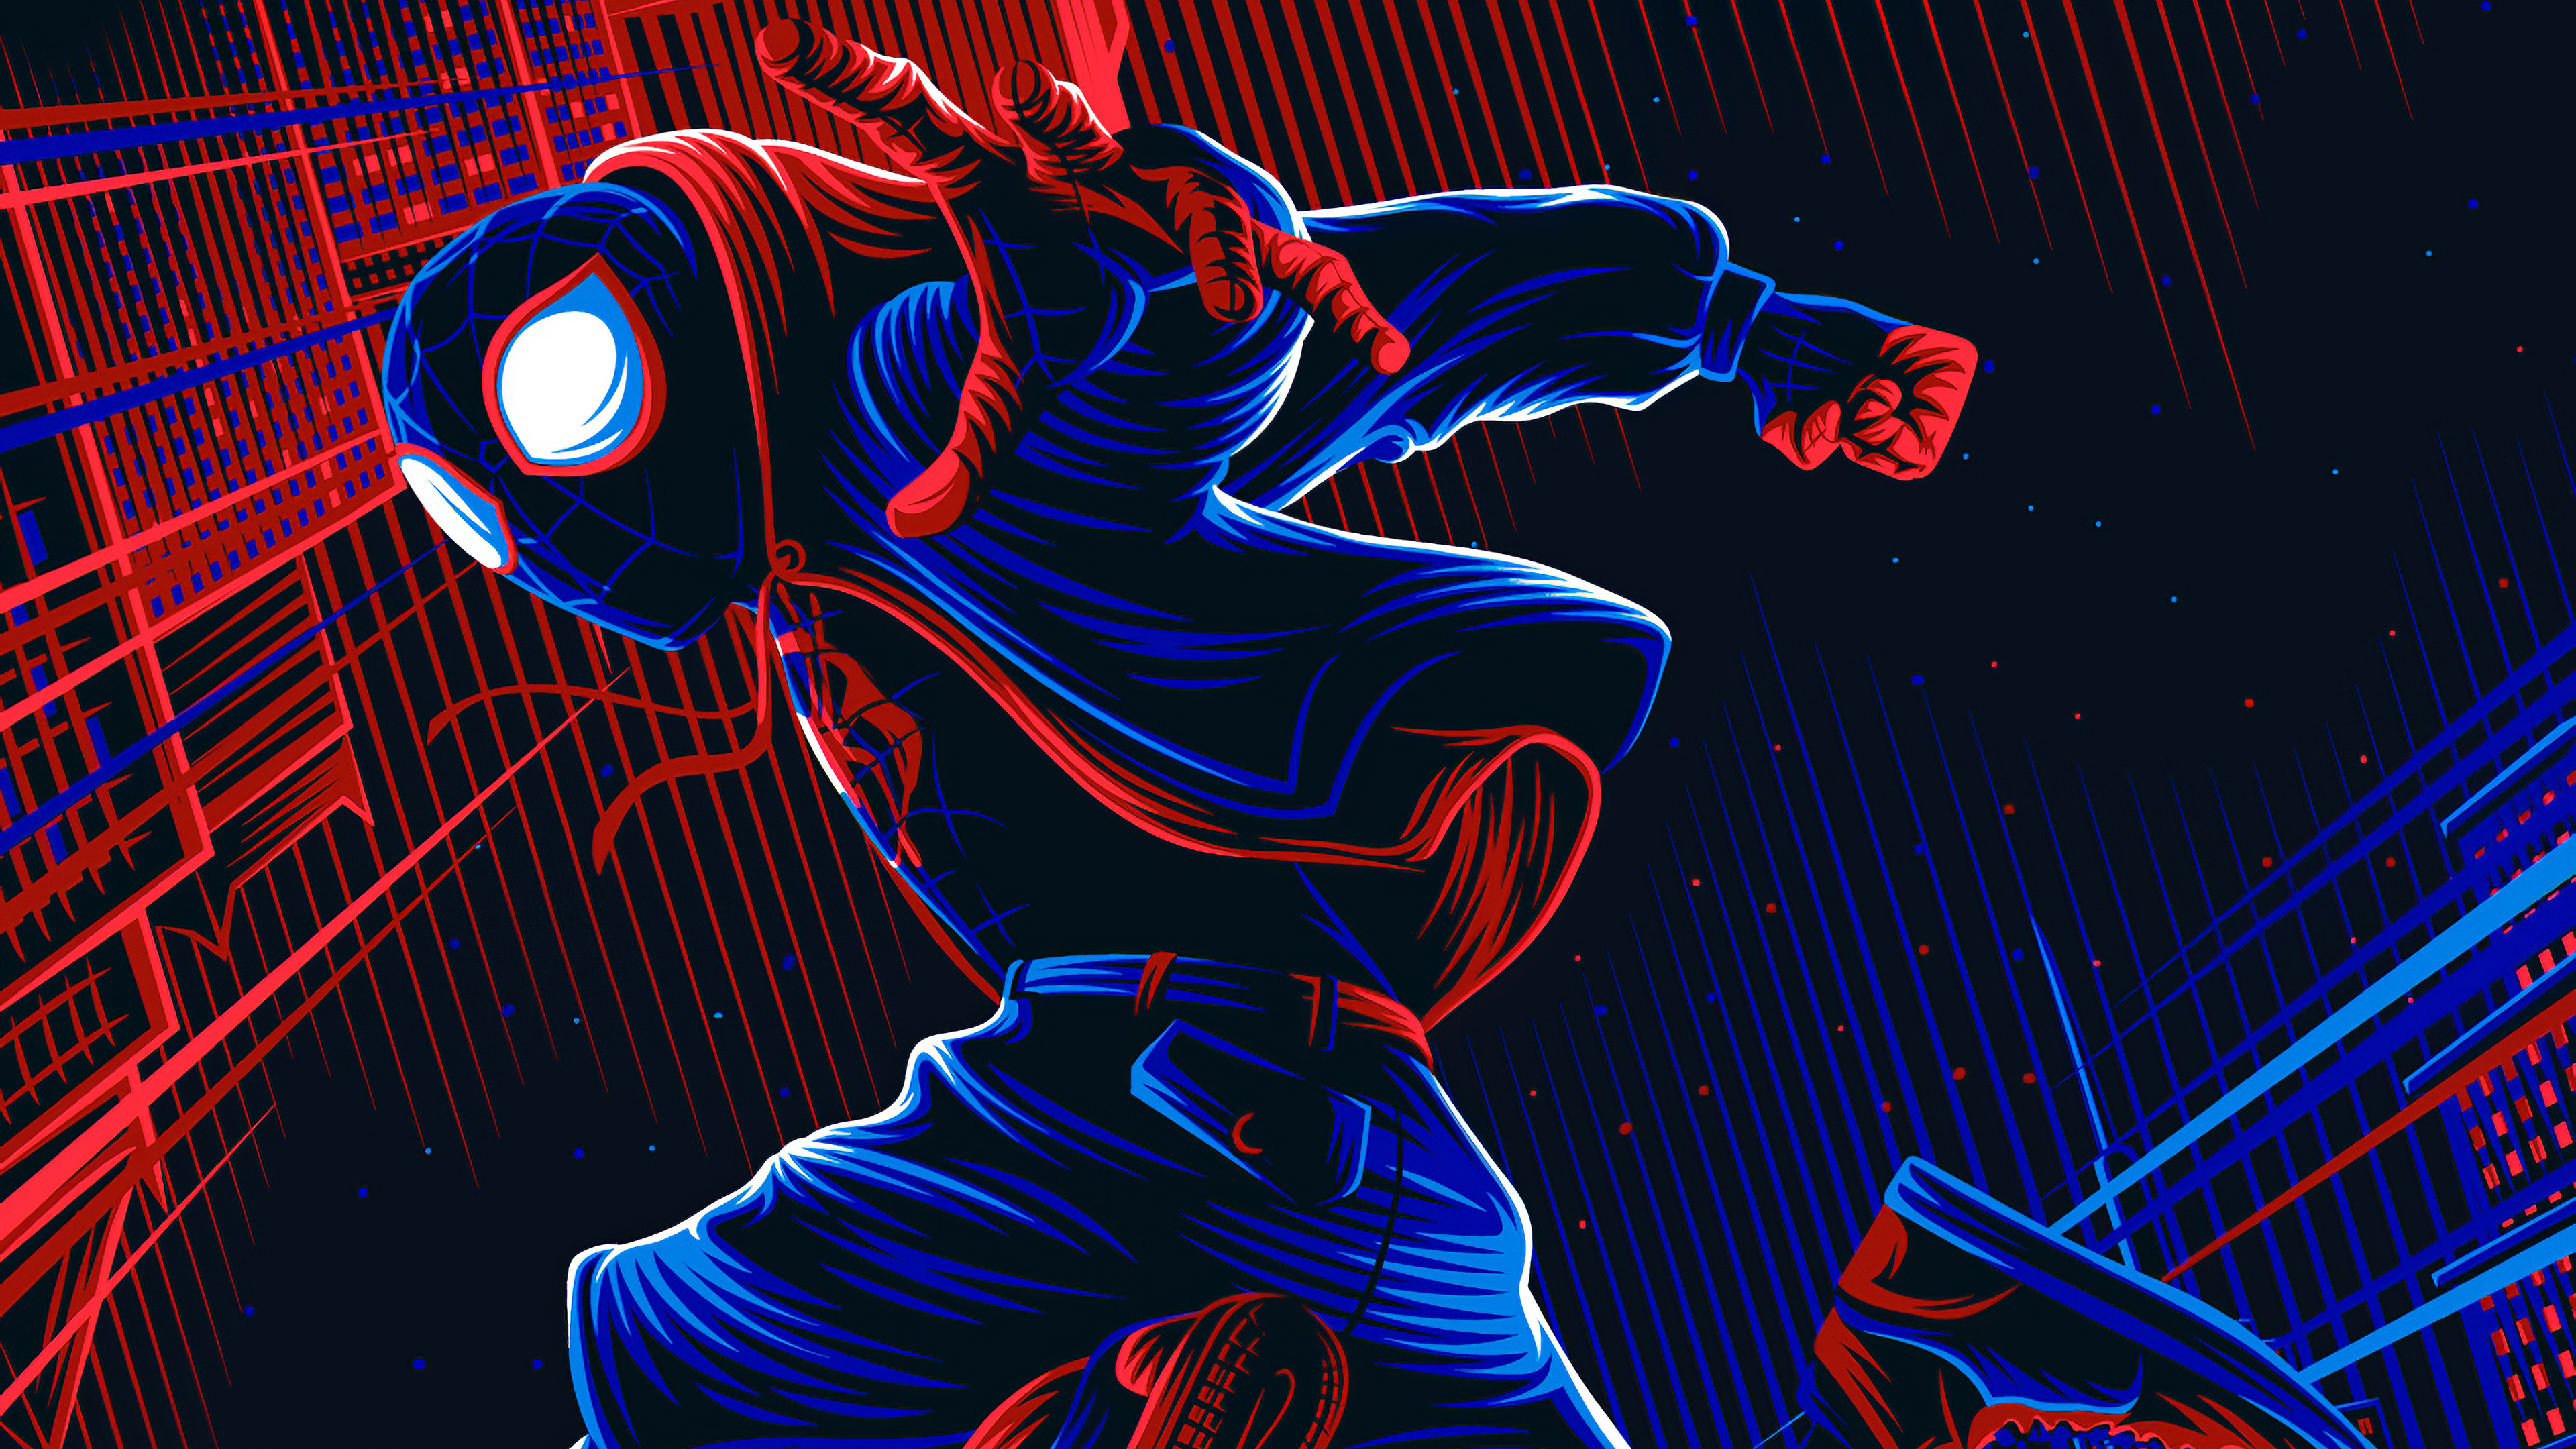 Spider-Man 4k Ultra HD Wallpaper | Background Image | 3840x2160